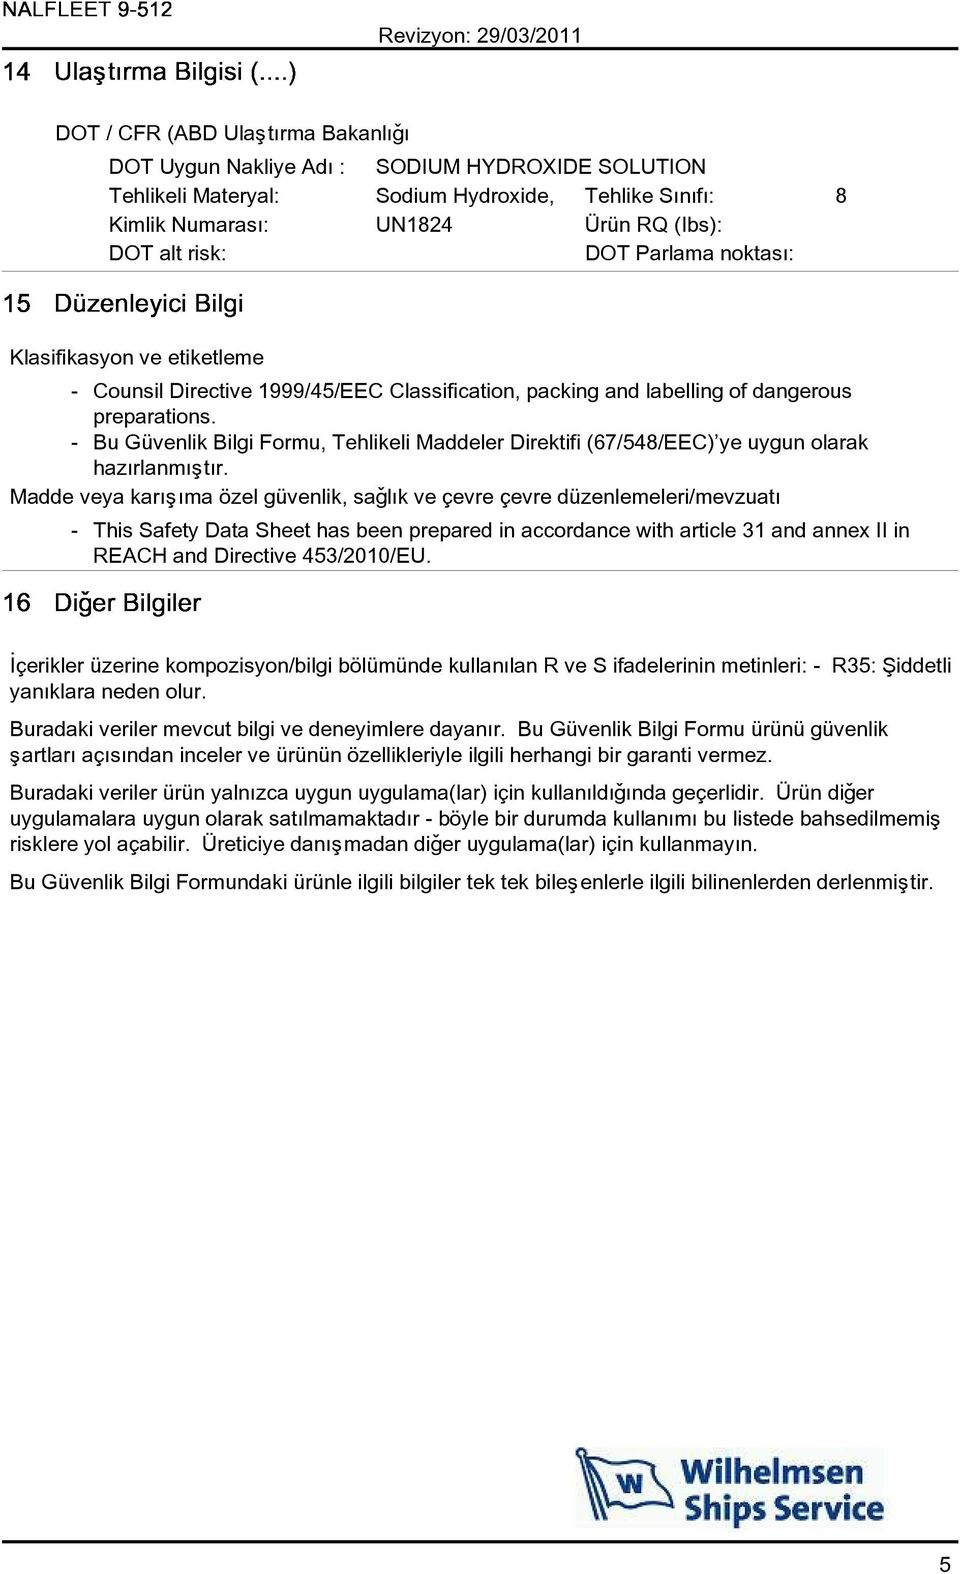 Madde veya karýþýma özel güvenlik, saðlýk ve çevre çevre düzenlemeleri/mevzuatý - This Safety Data Sheet has been prepared in accordance with article 31 and annex II in REACH and Directive